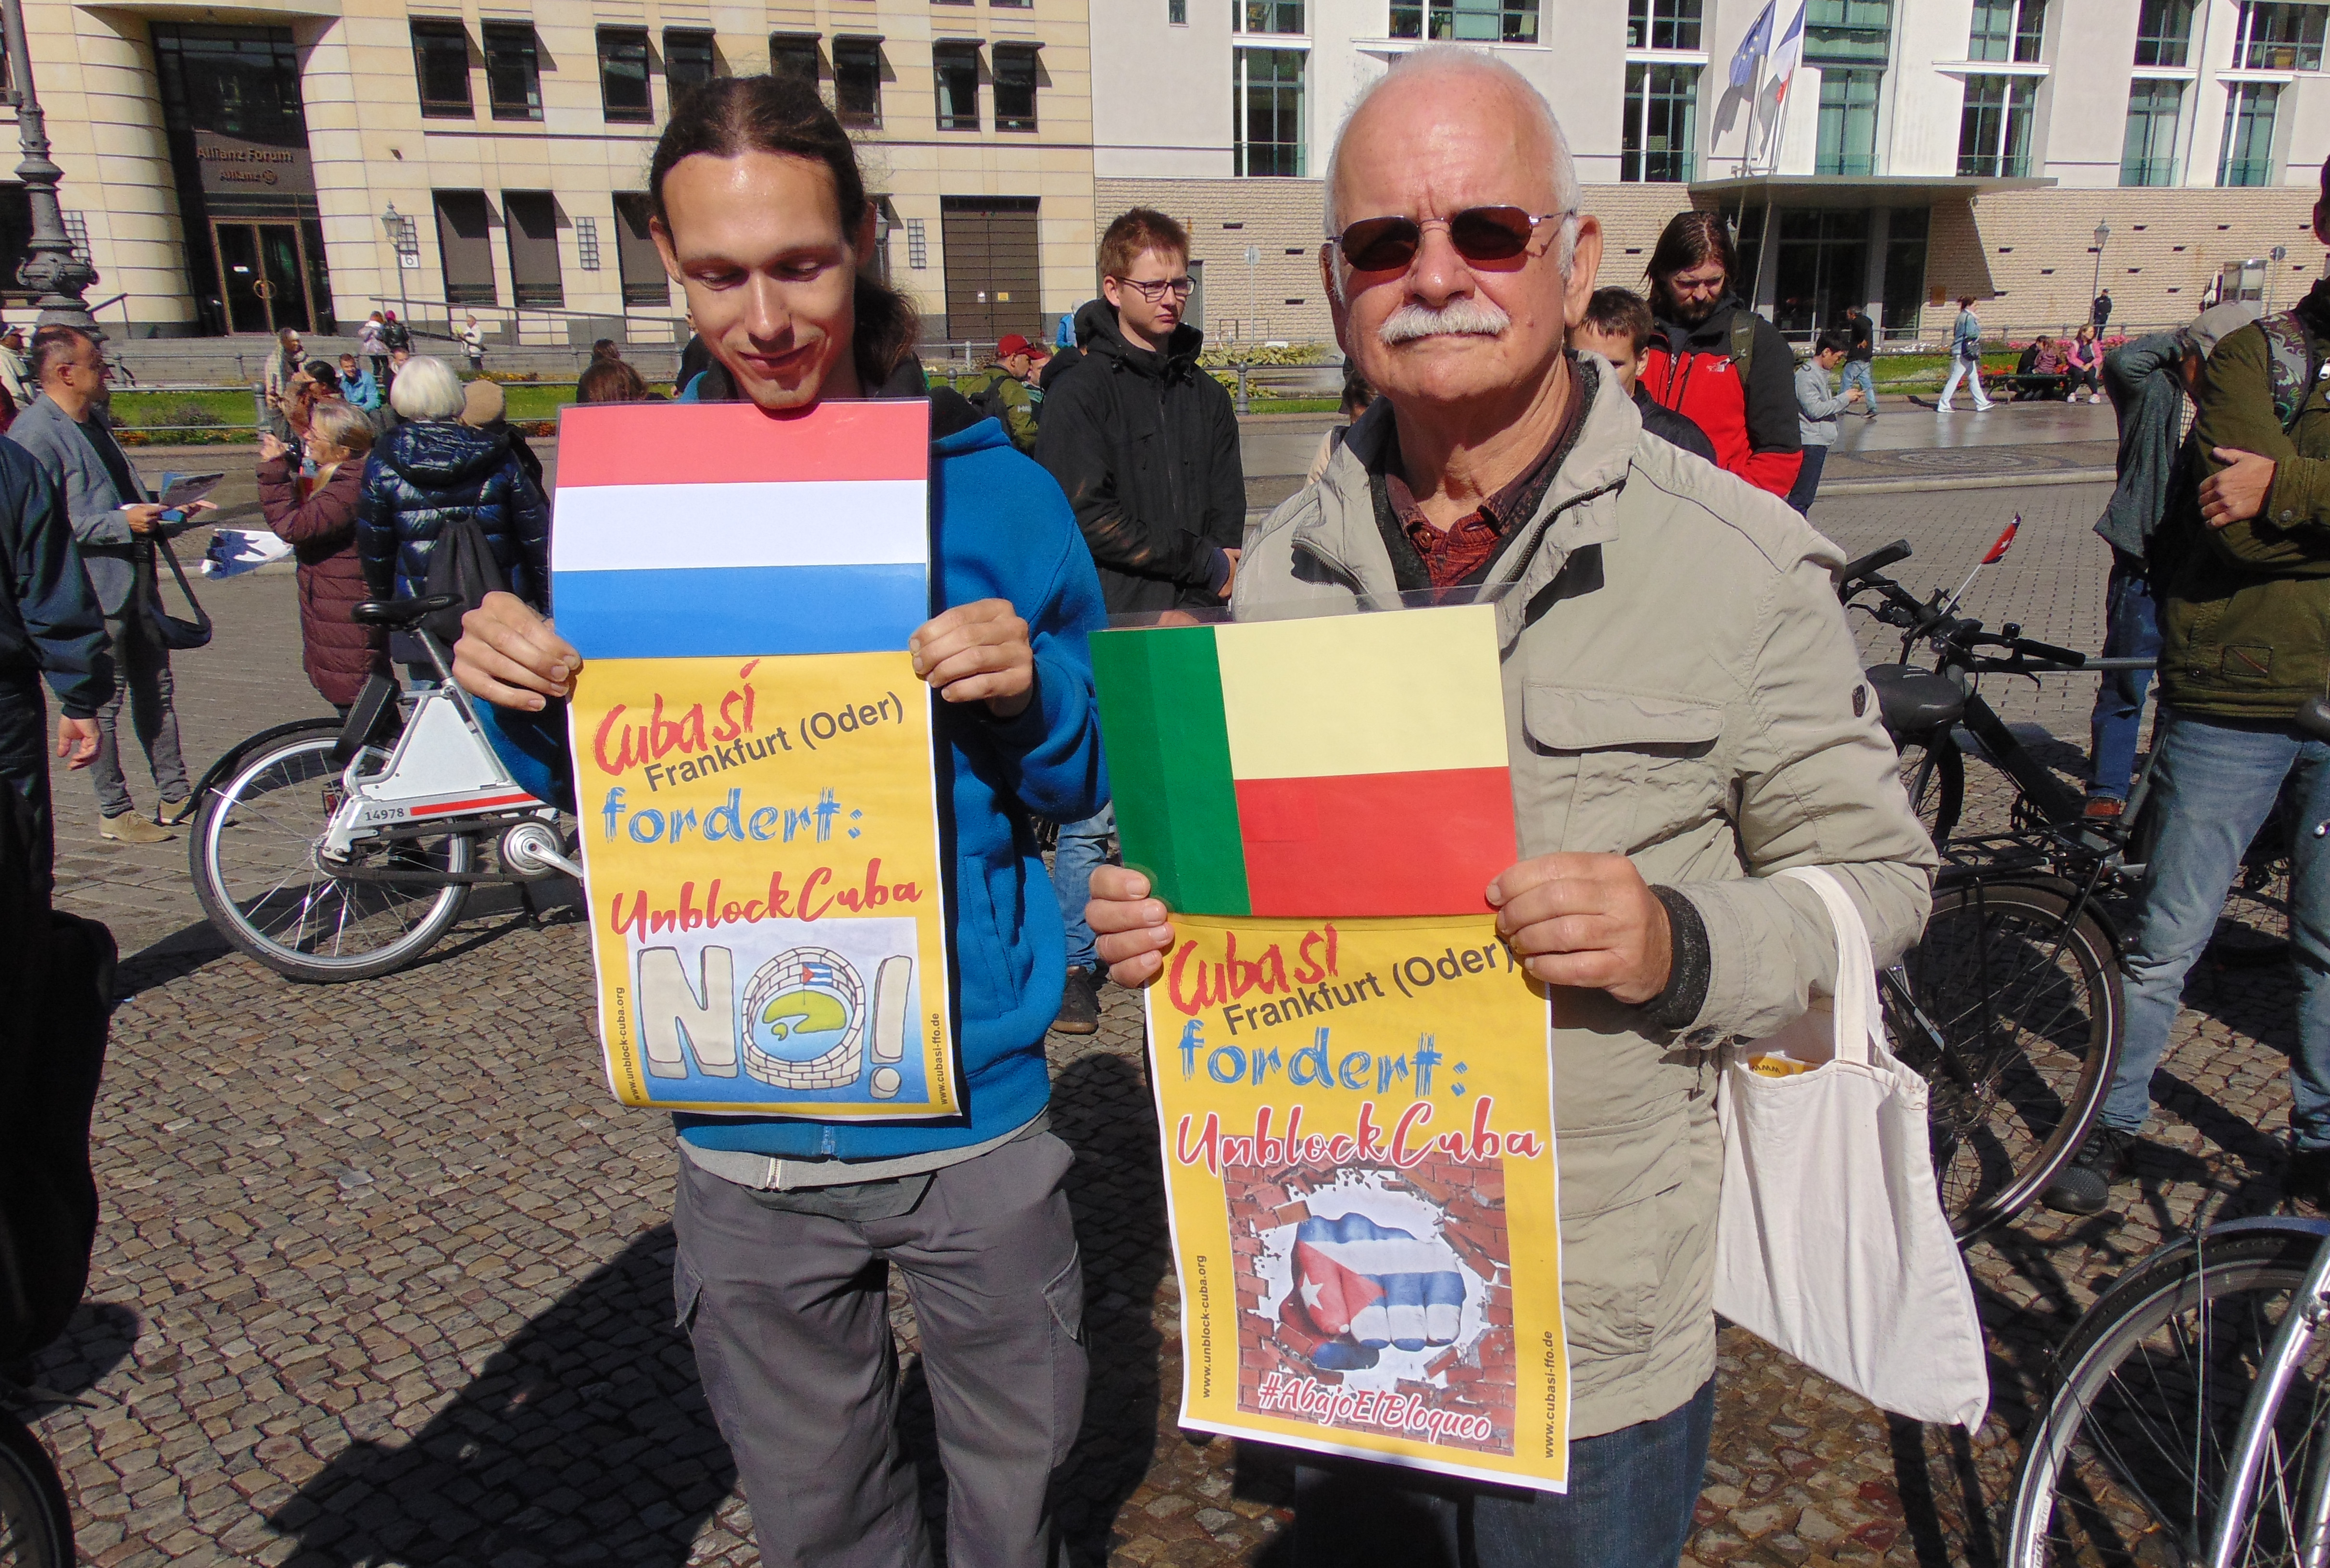 Kundgebung am Brandenburger Tor